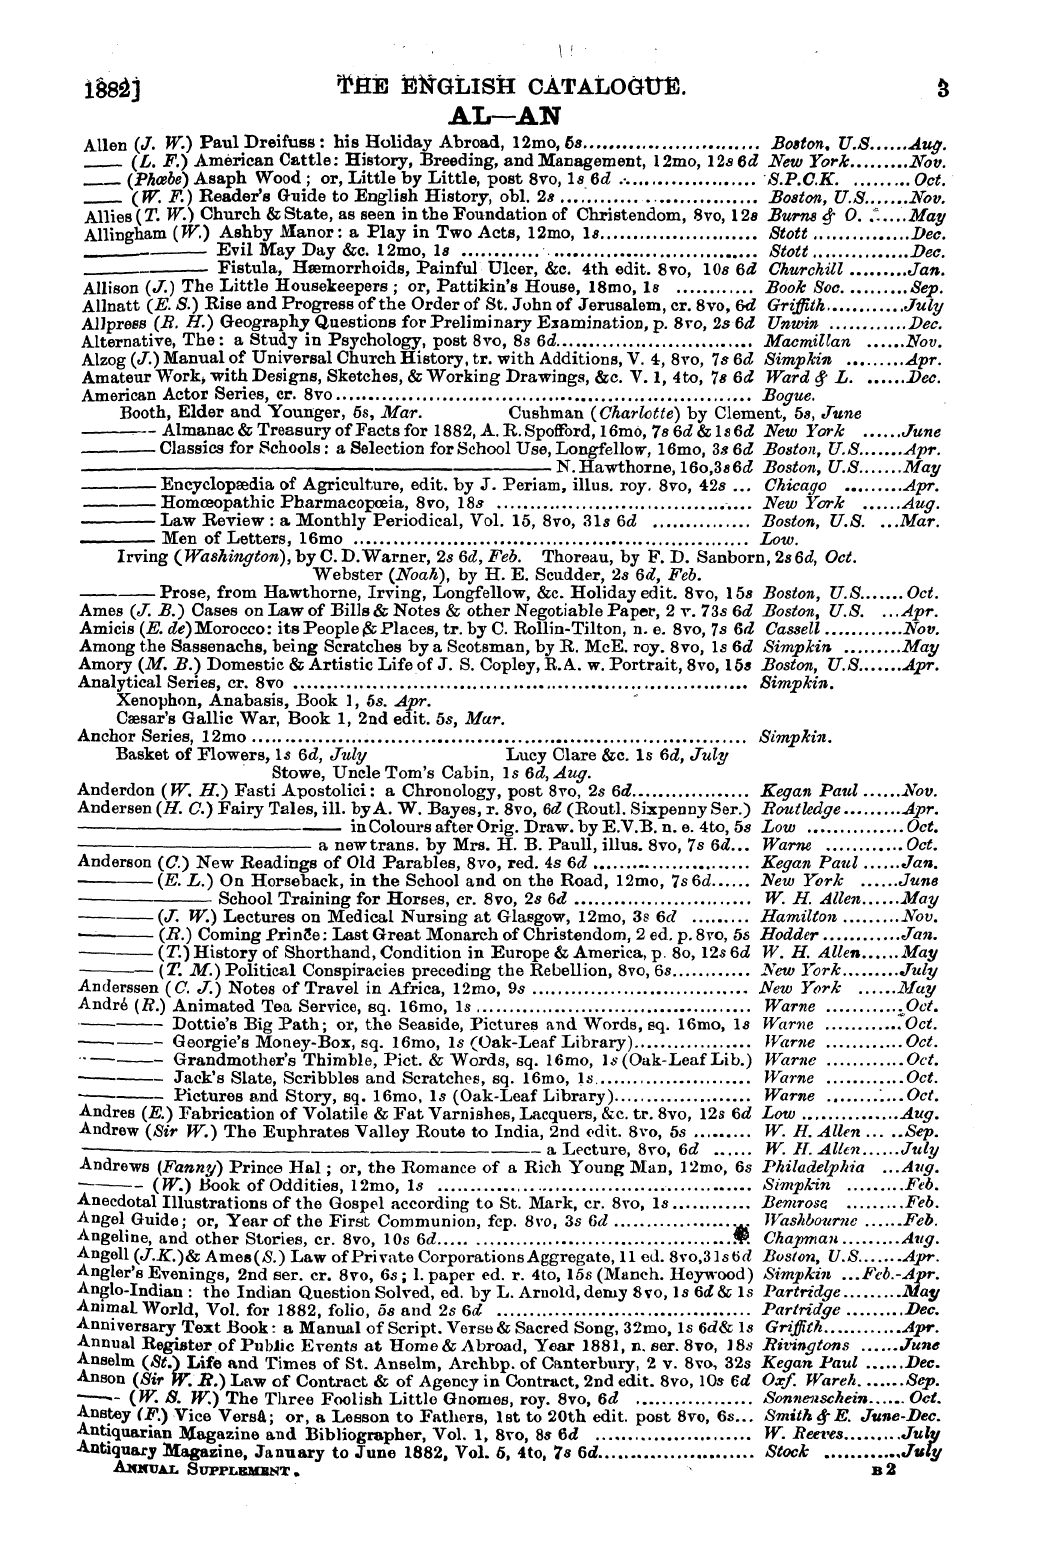 Publishers’ Circular (1880-1890): jS F Y, 1st edition: 5